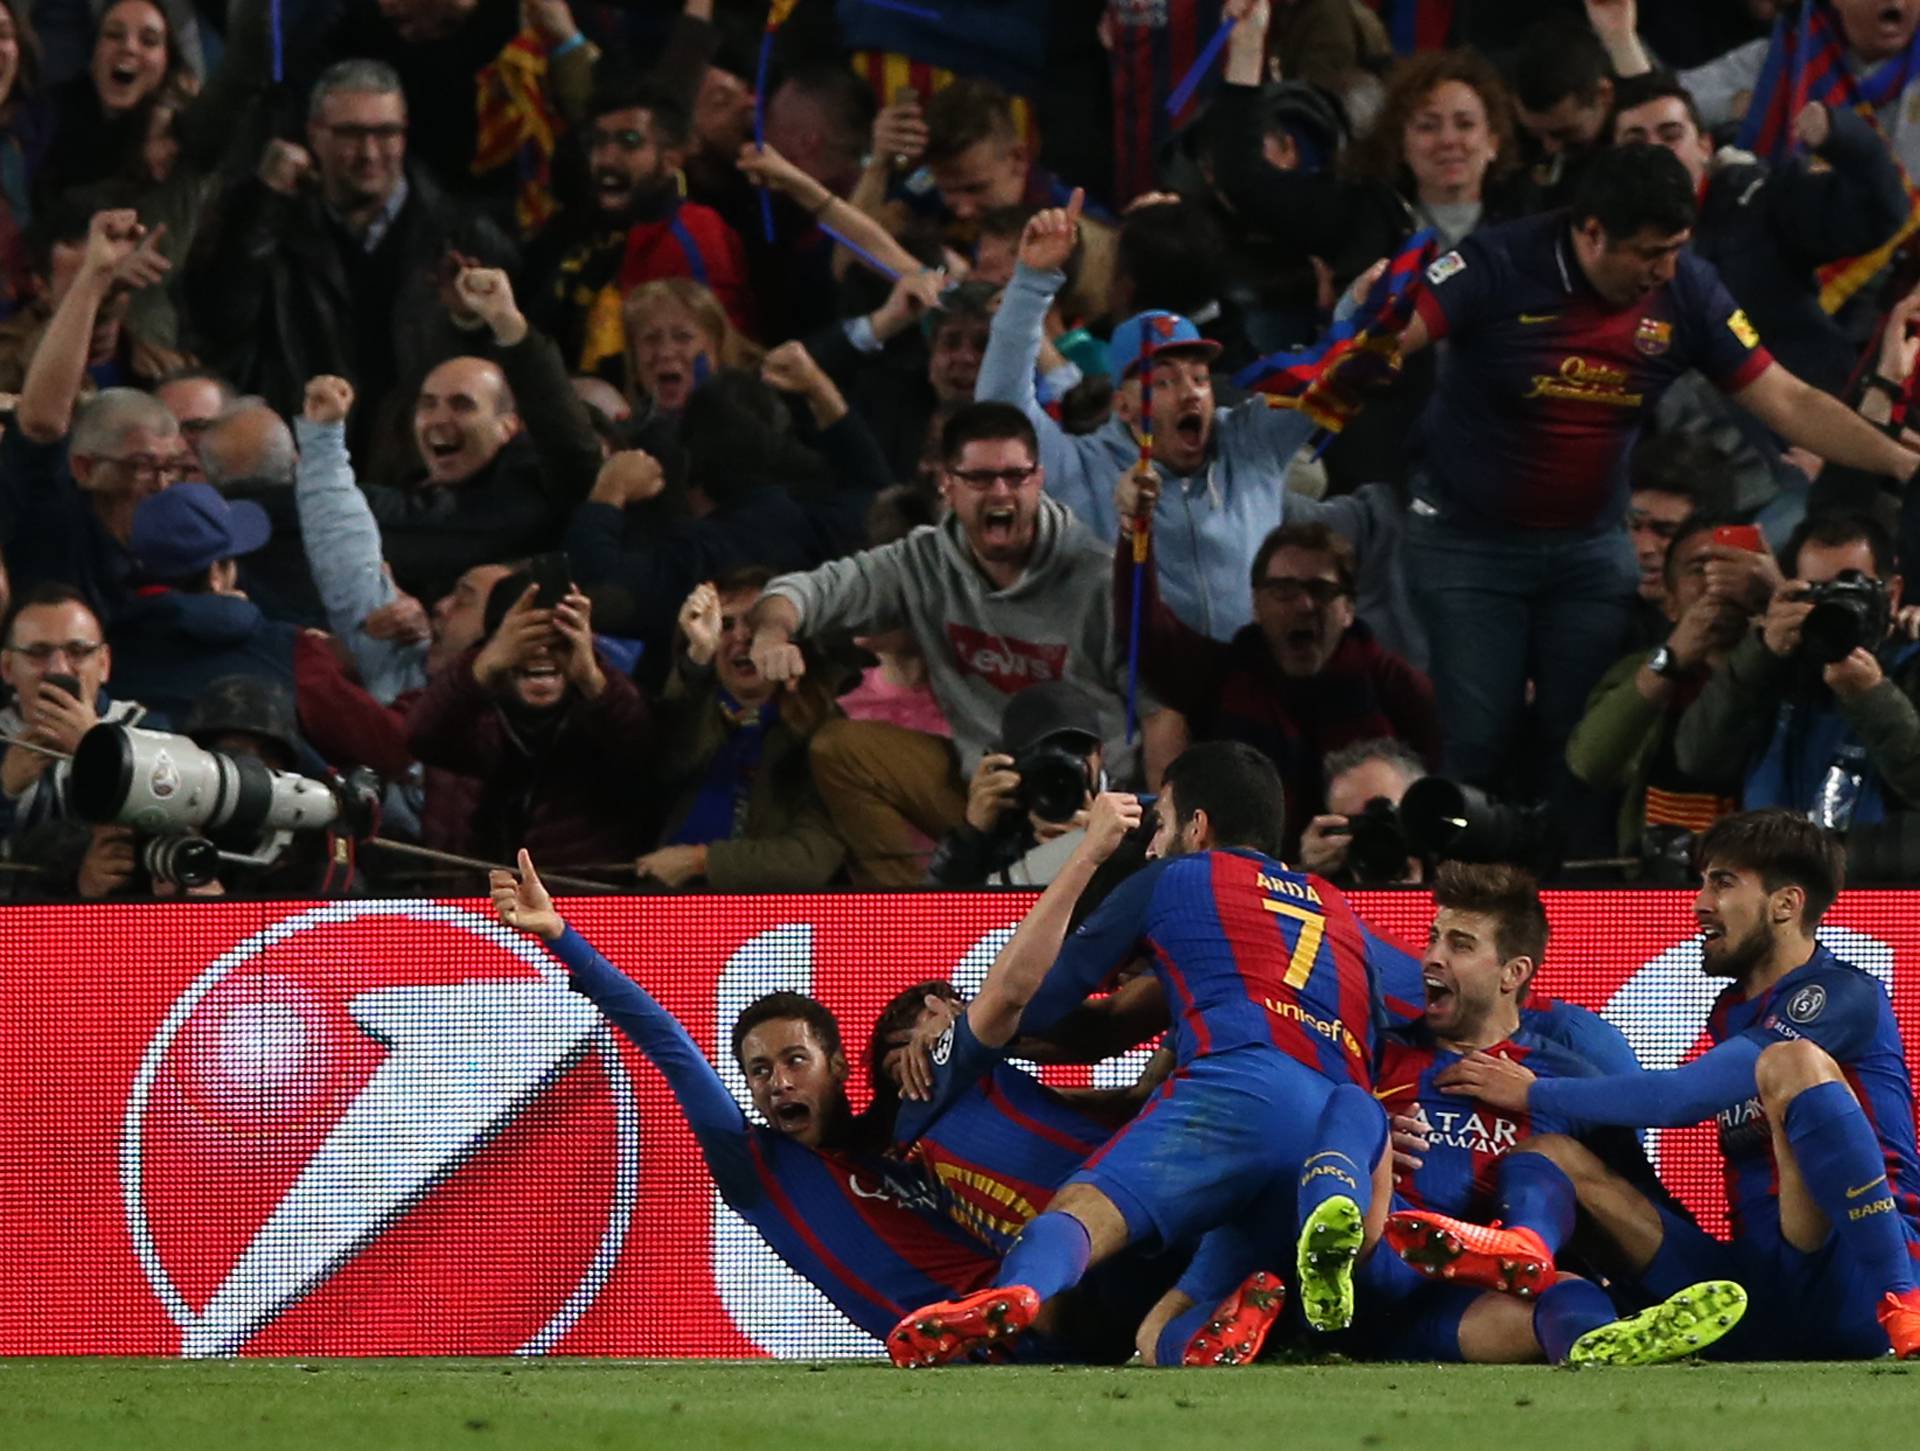 Barcelona's Sergi Roberto celebrates scoring their sixth goal with team mates